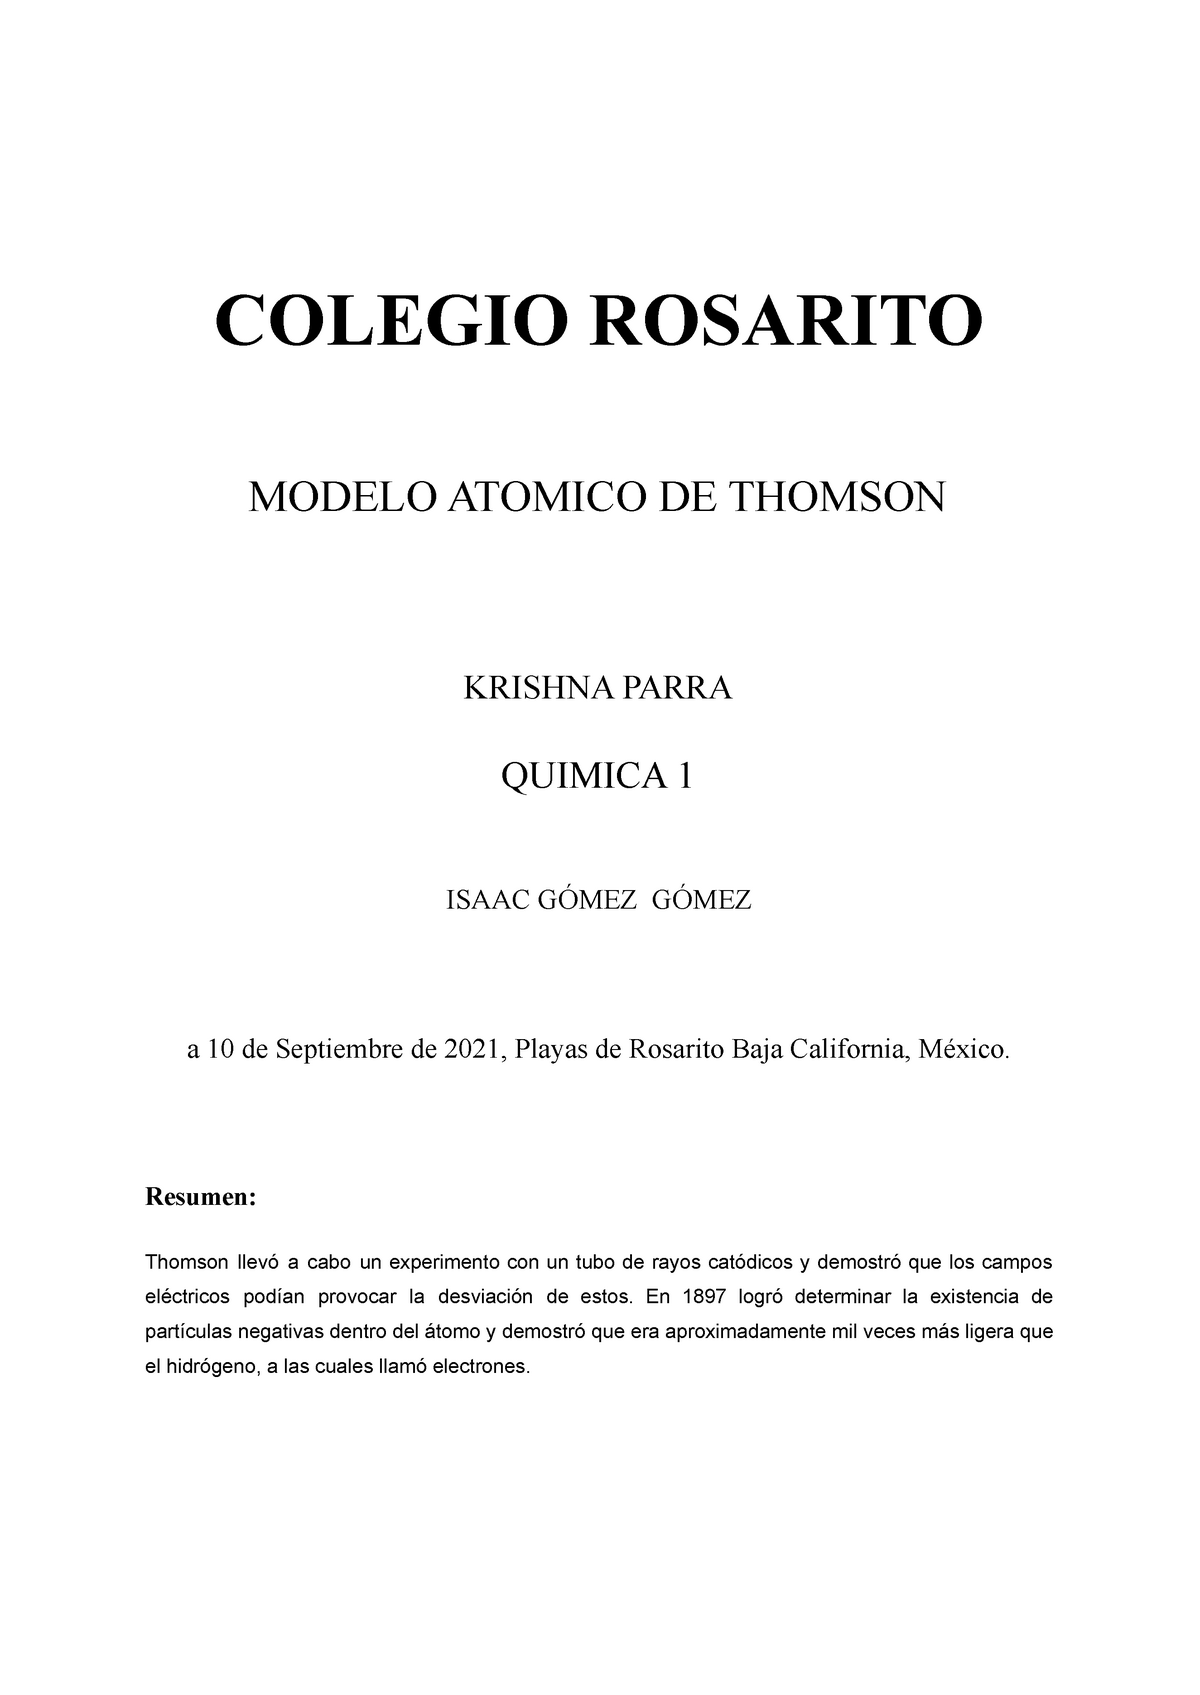 Modelo atomico de Thomson - COLEGIO ROSARITO MODELO ATOMICO DE THOMSON  KRISHNA PARRA QUIMICA 1 ISAAC - Studocu